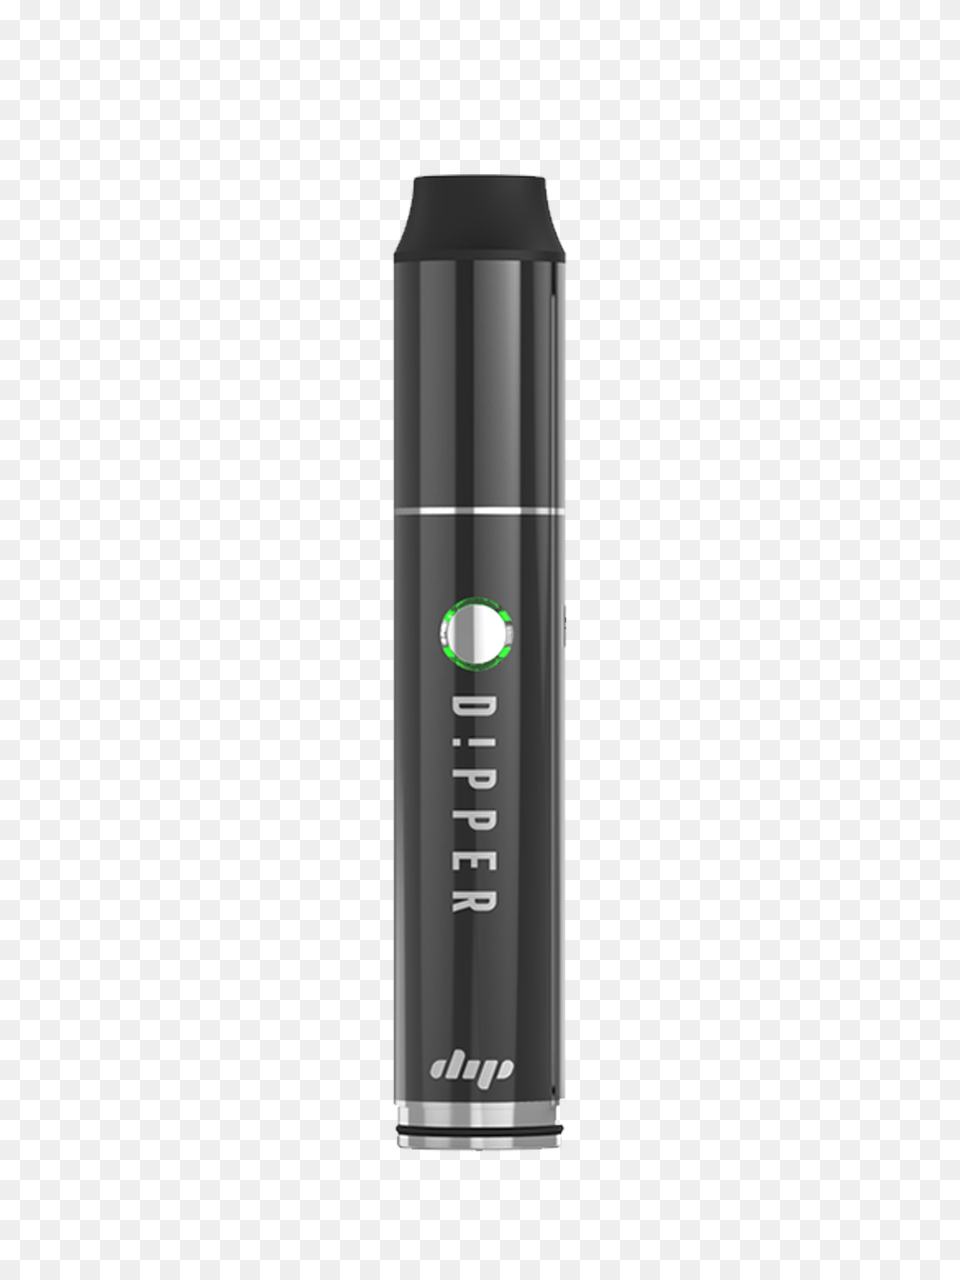 The Dipper Dipstick Vaporizer Reviews Rating Vaporizers Comparison, Bottle, Shaker, Tin Png Image